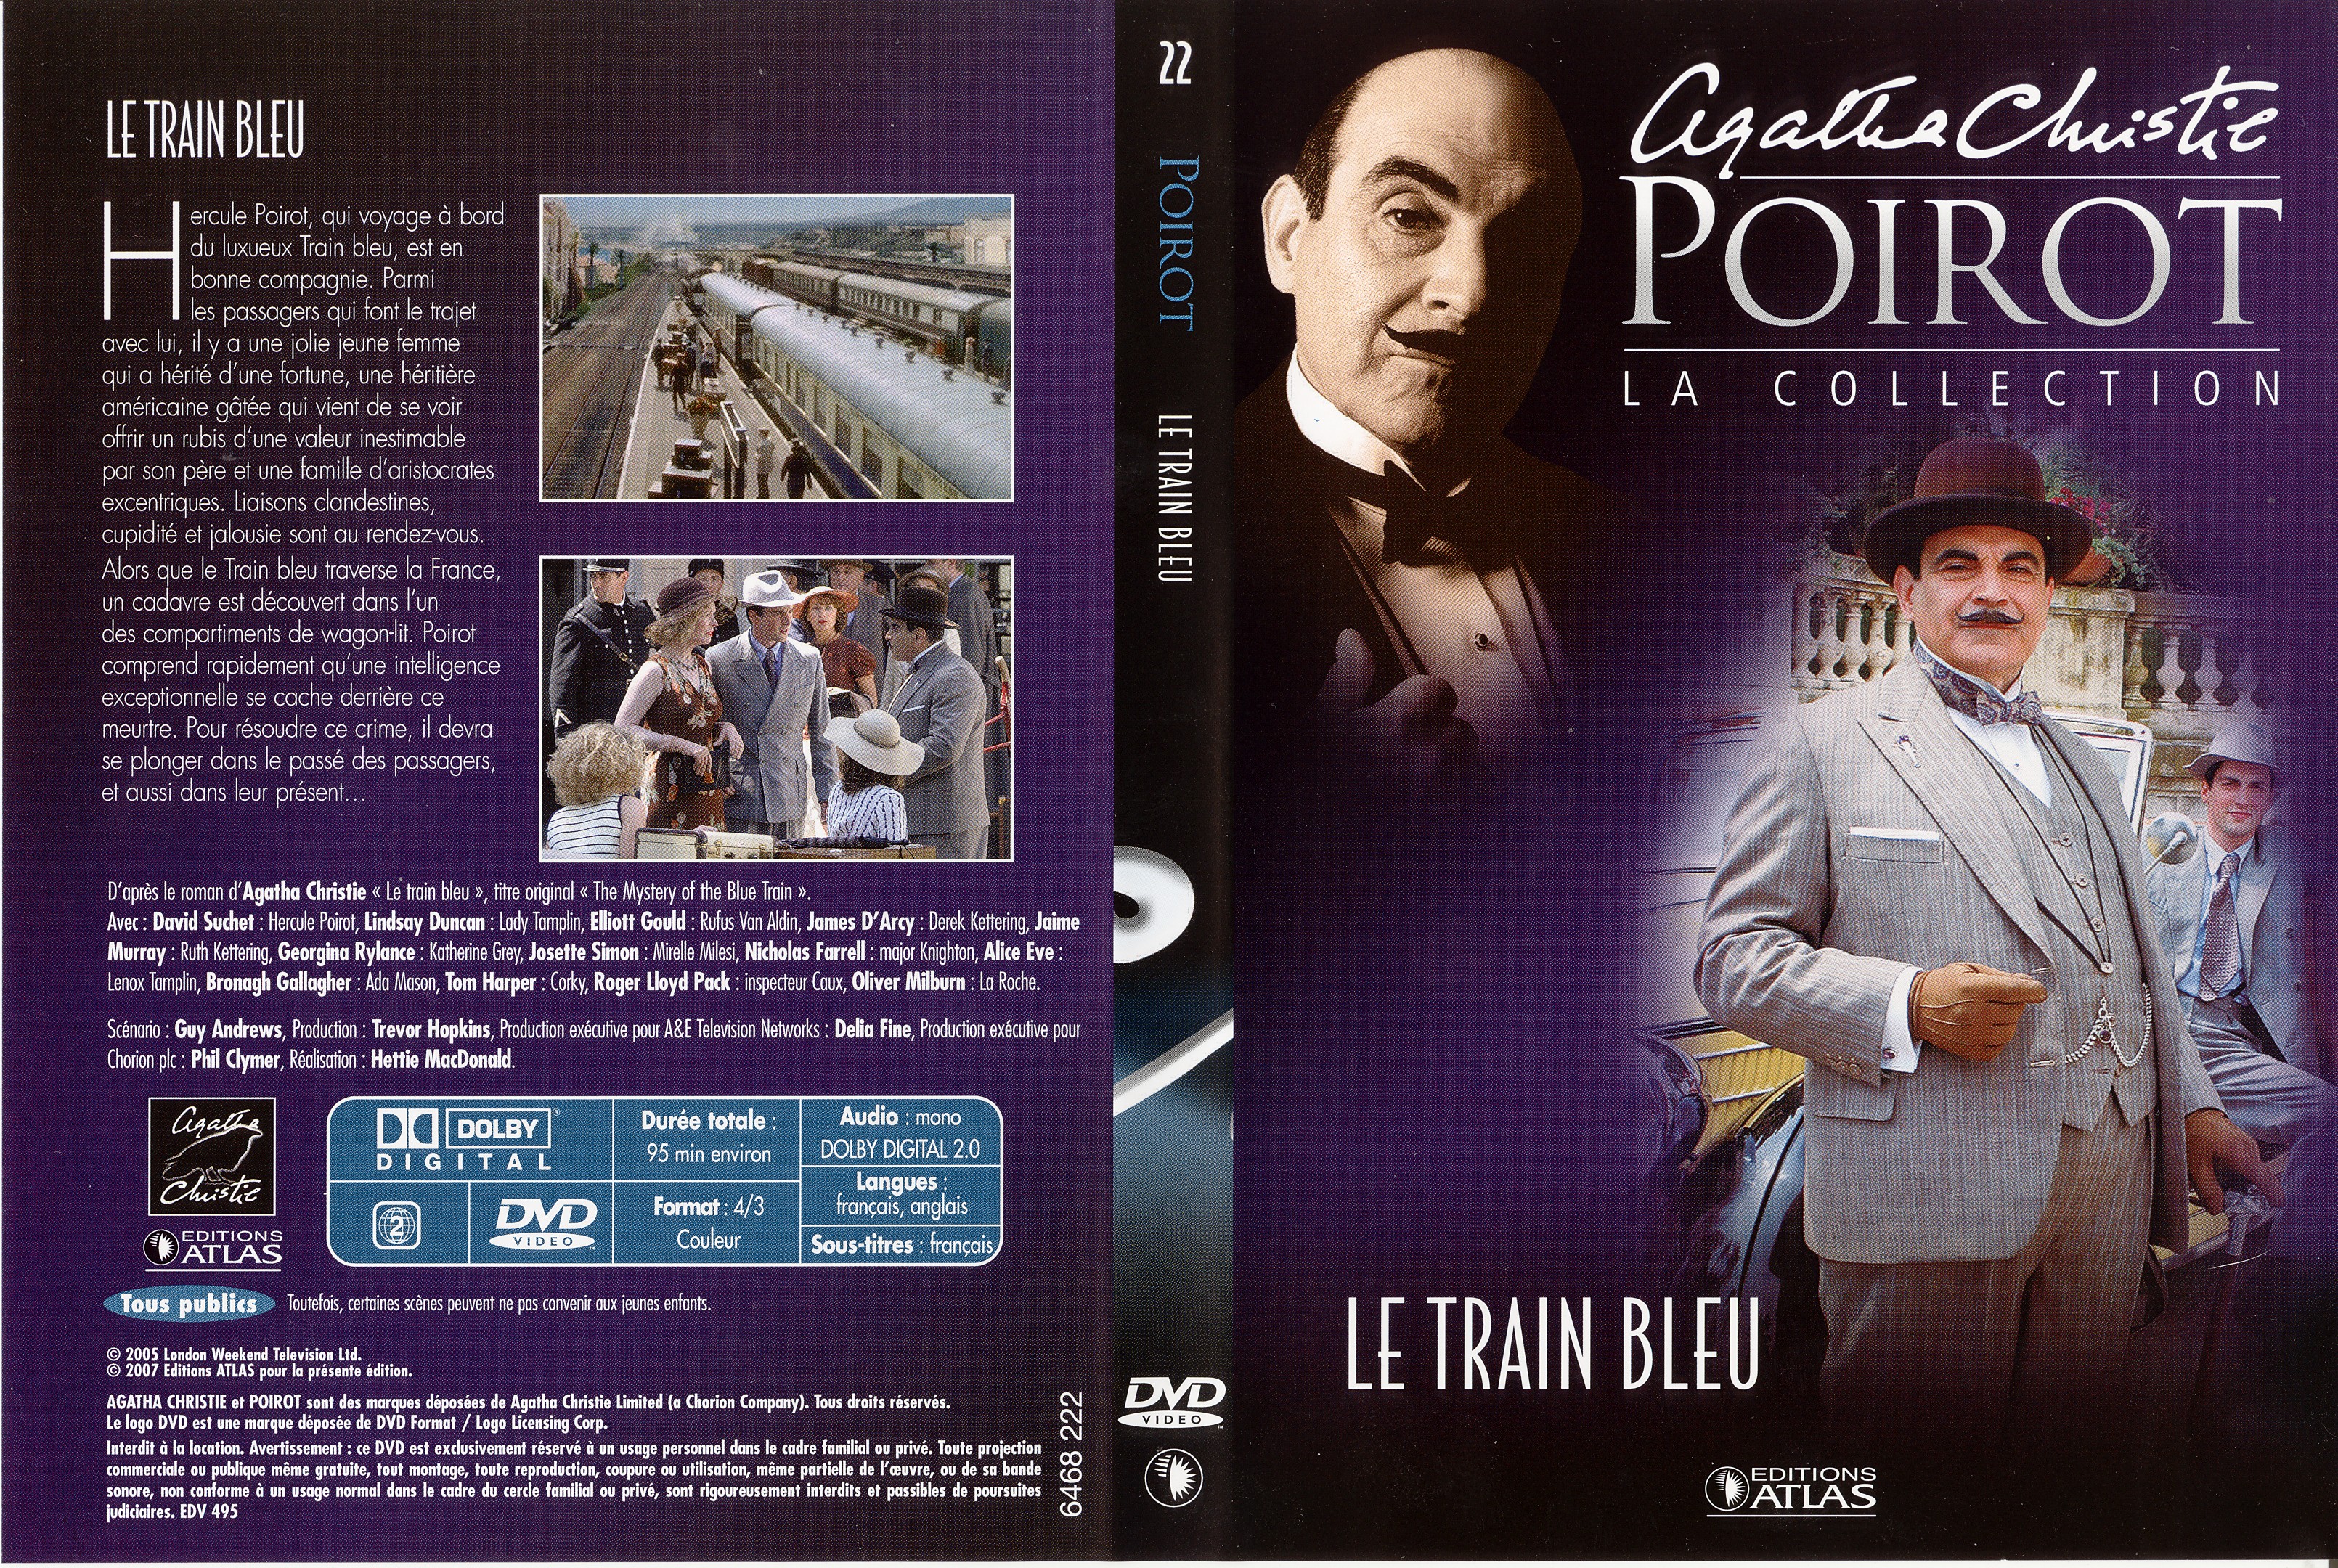 Jaquette DVD Hercule Poirot vol 22